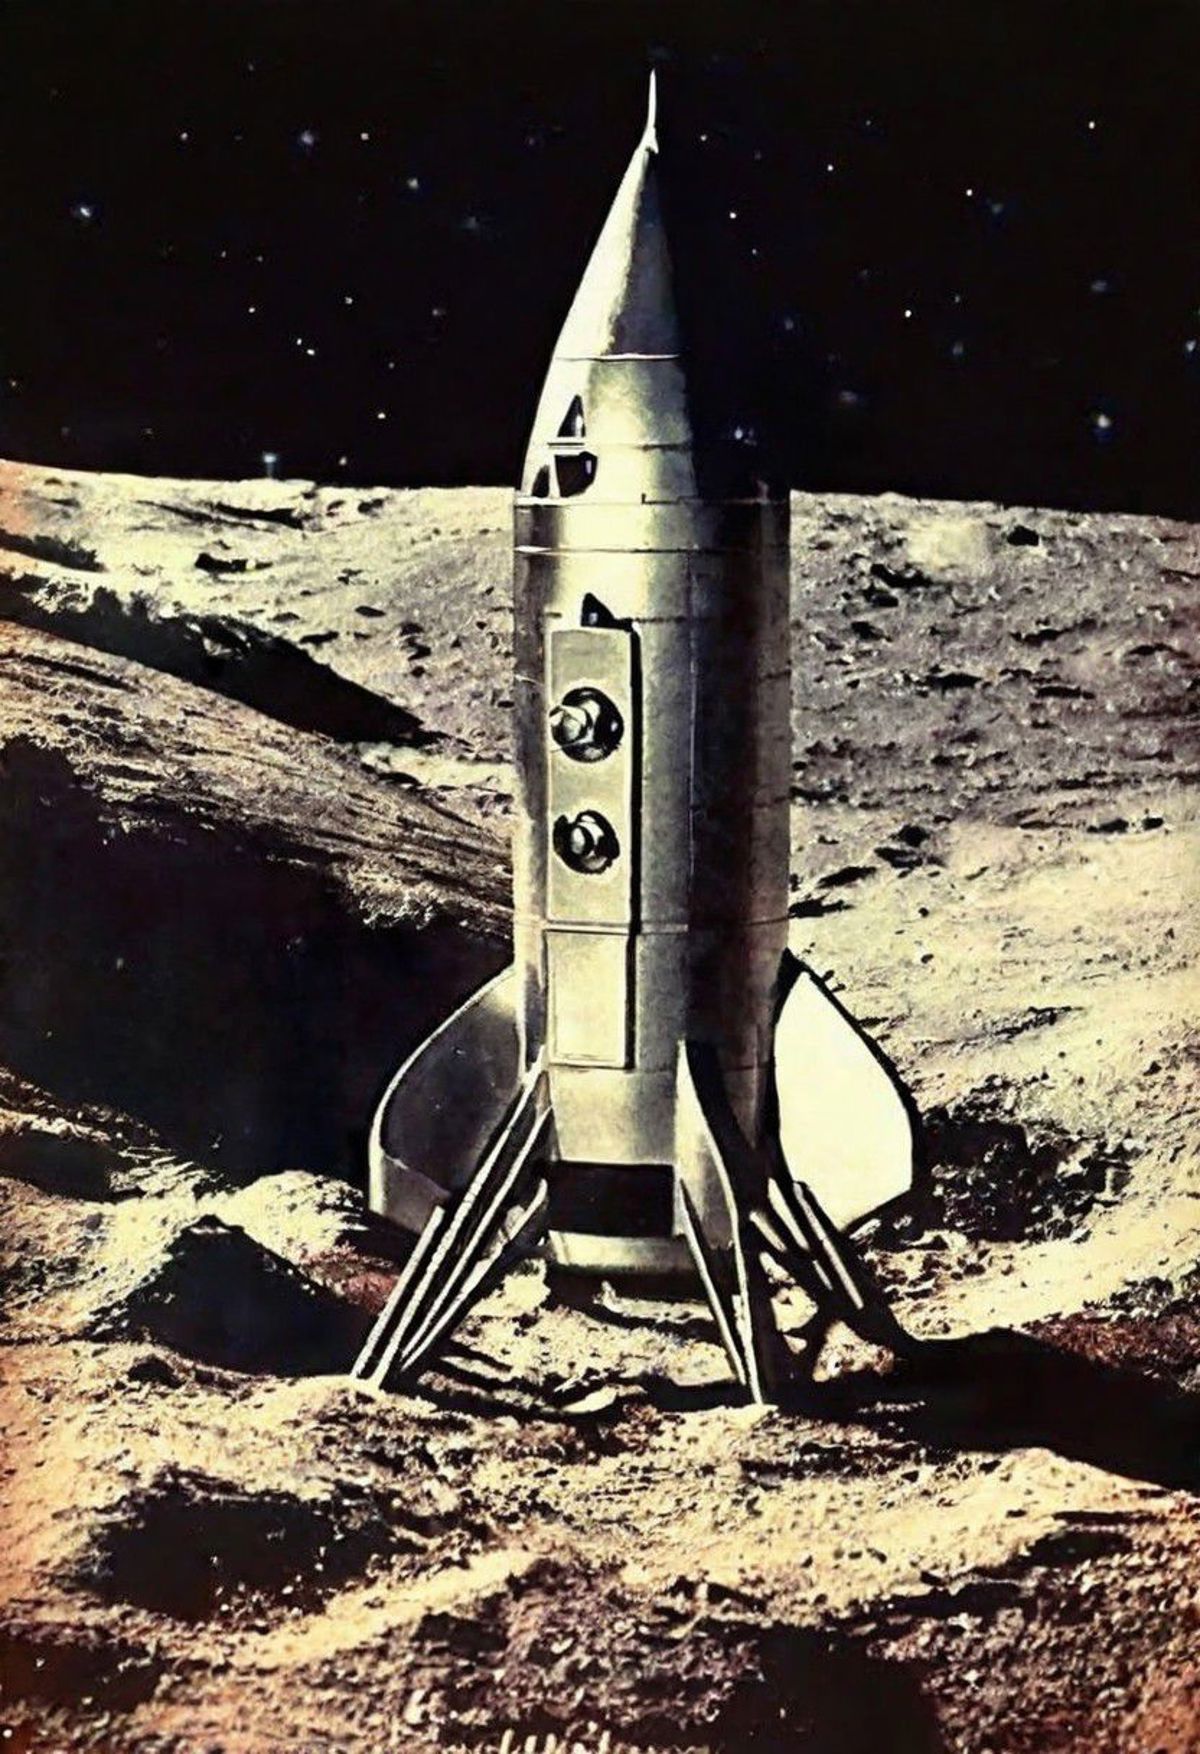 Retro Rocket image by TomR_NYC